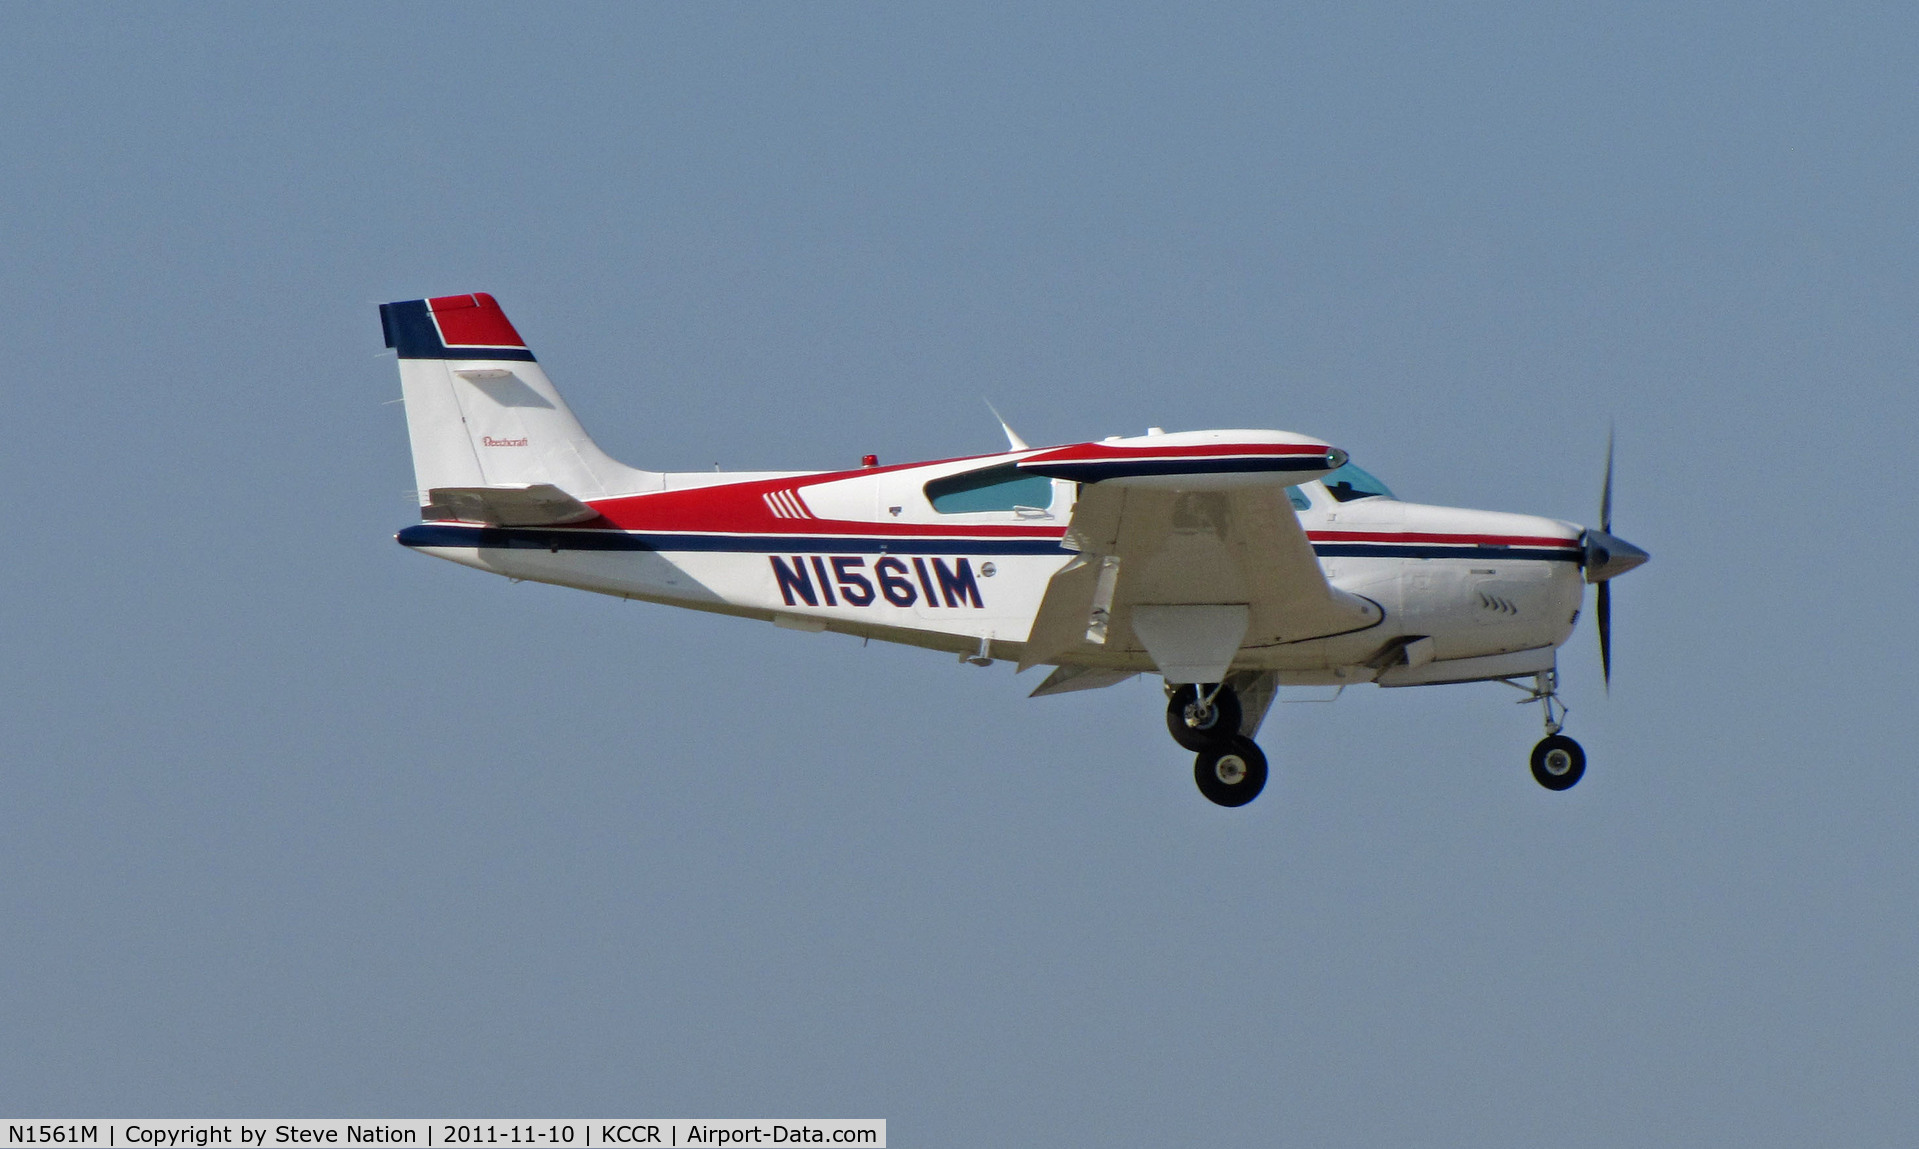 N1561M, 1989 Beech F33A Bonanza C/N CE-1374, Locally-based Badger Air 1989 Beech F33A on approach to RWY 1L @ Concord, CA